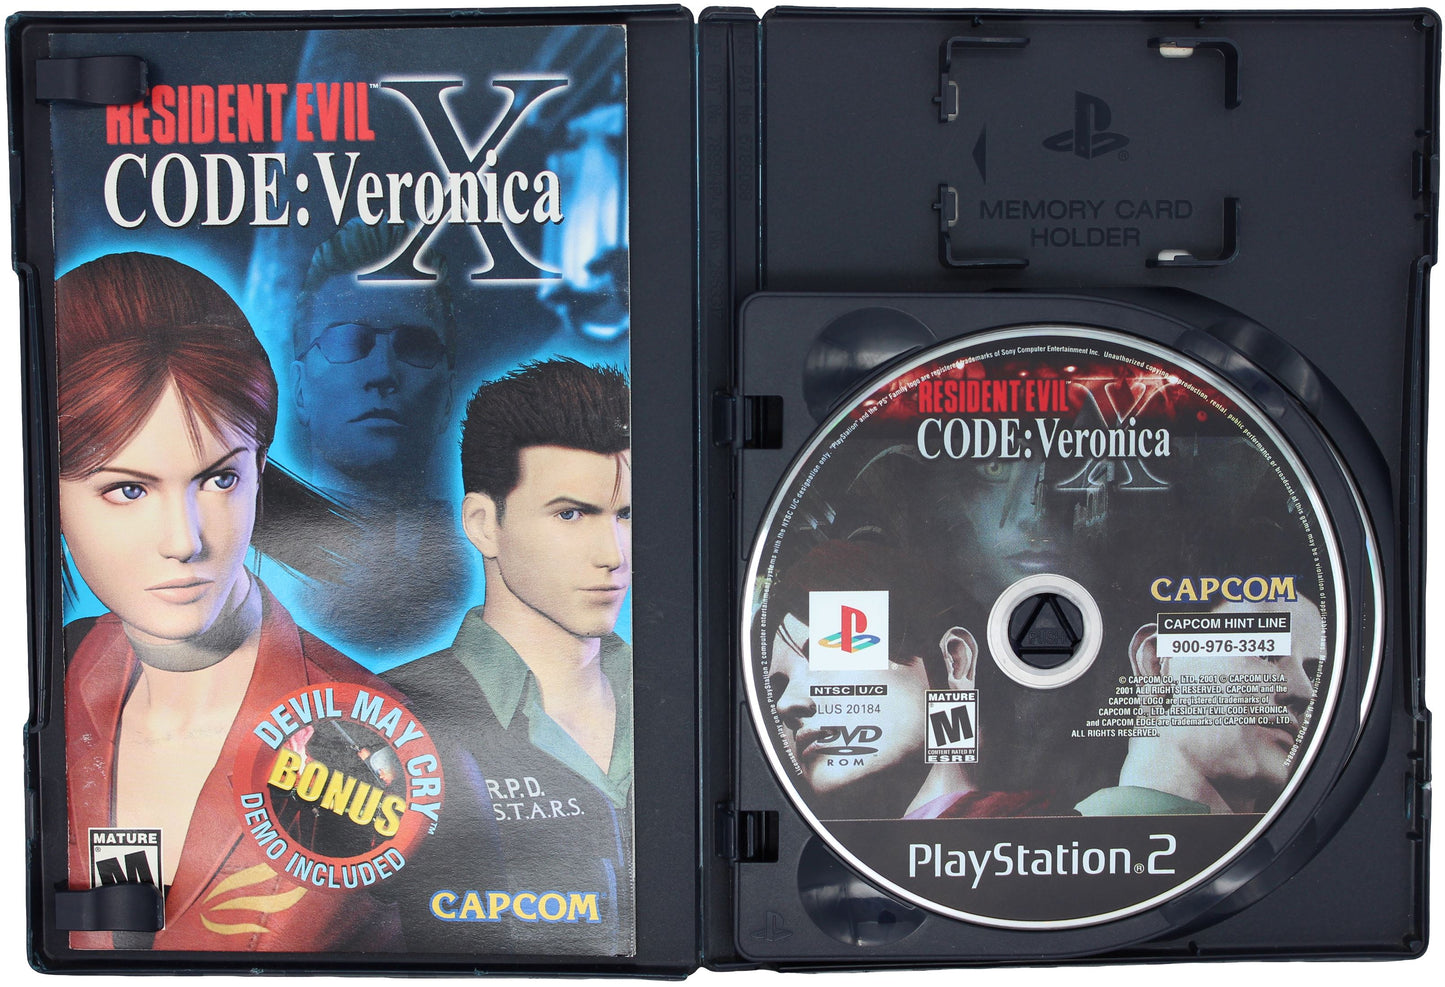 Resident Evil: CODE: Veronica X [Resident Evil 5th Anniversary Edition]